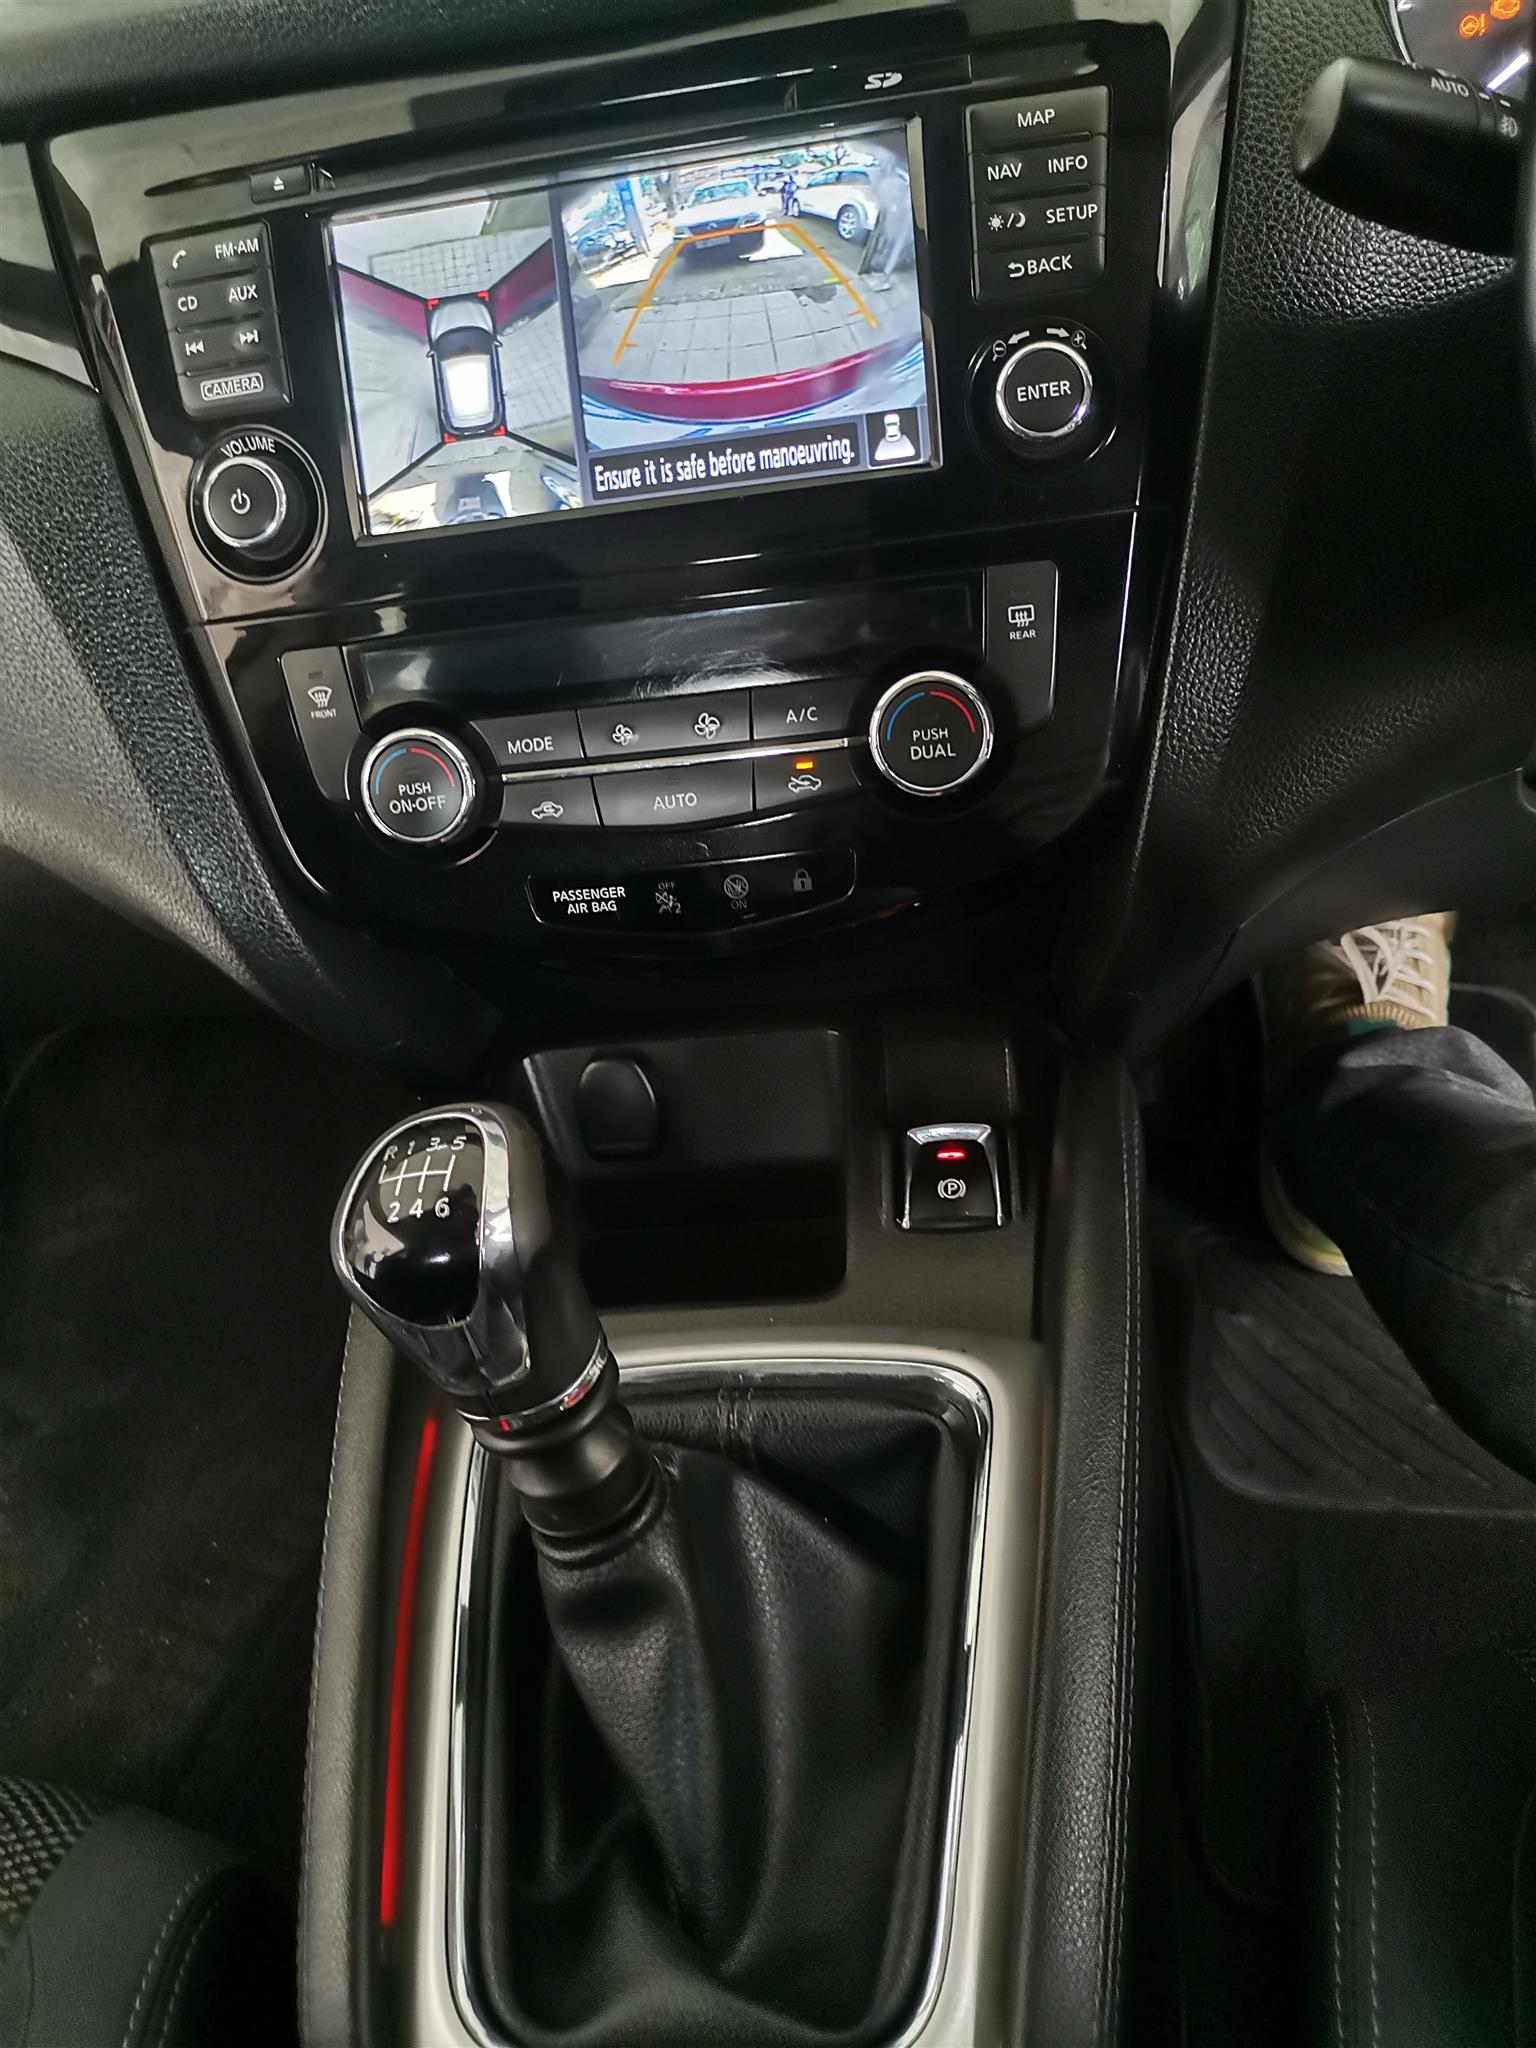 2015 Nissan Qashqai 1.6Acenta n Tec manual  Mechanically perfect